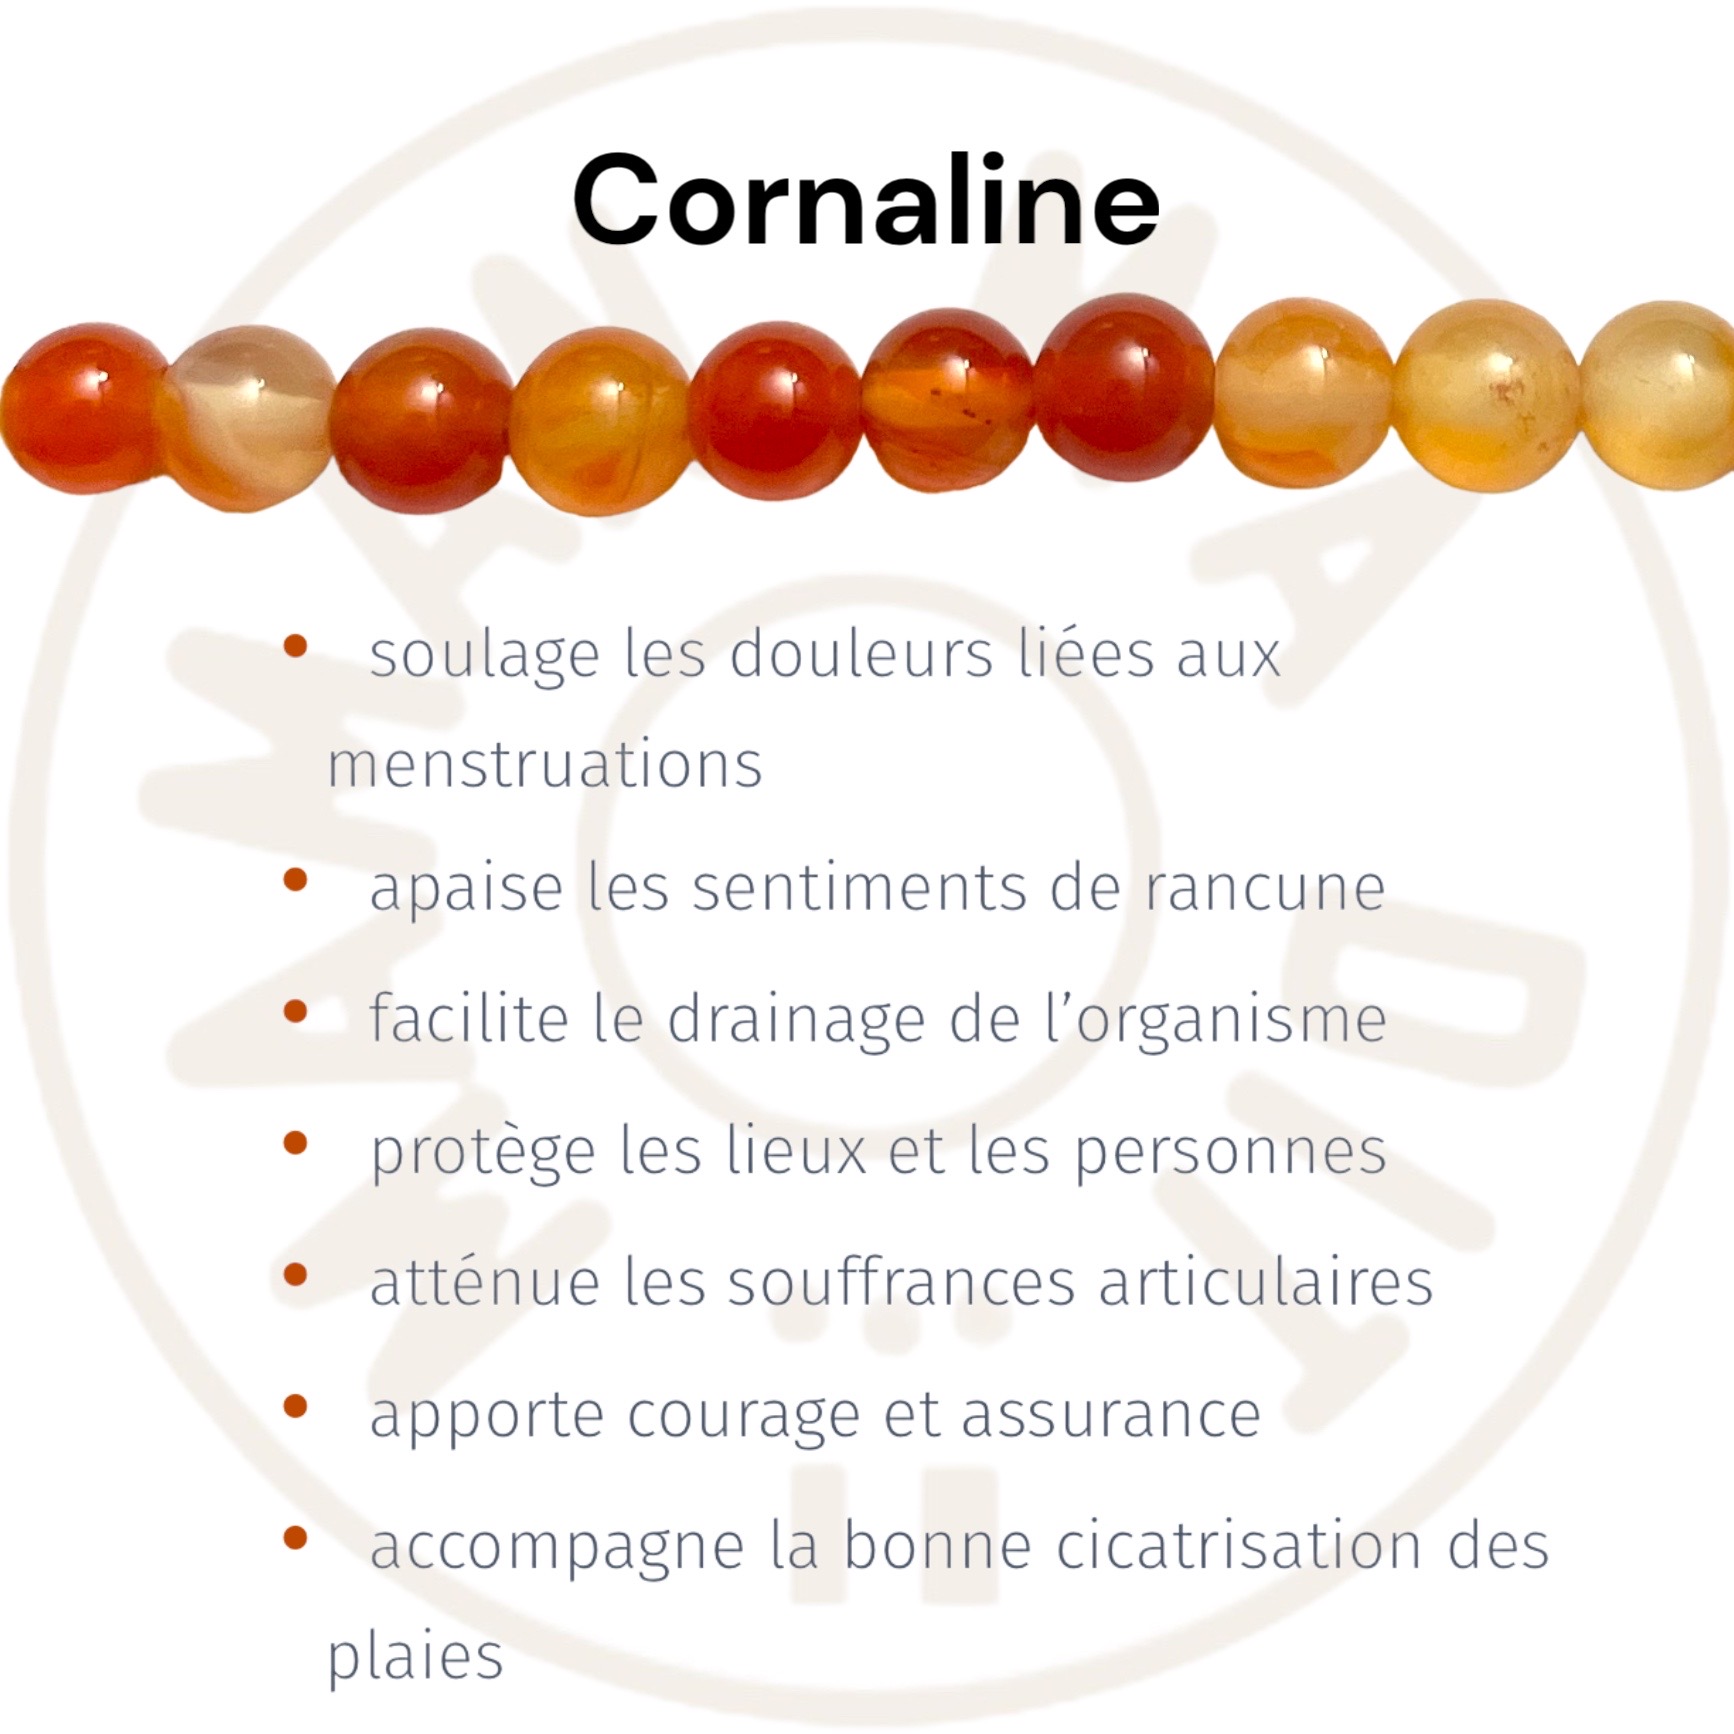 cornaline-vertus.jpg